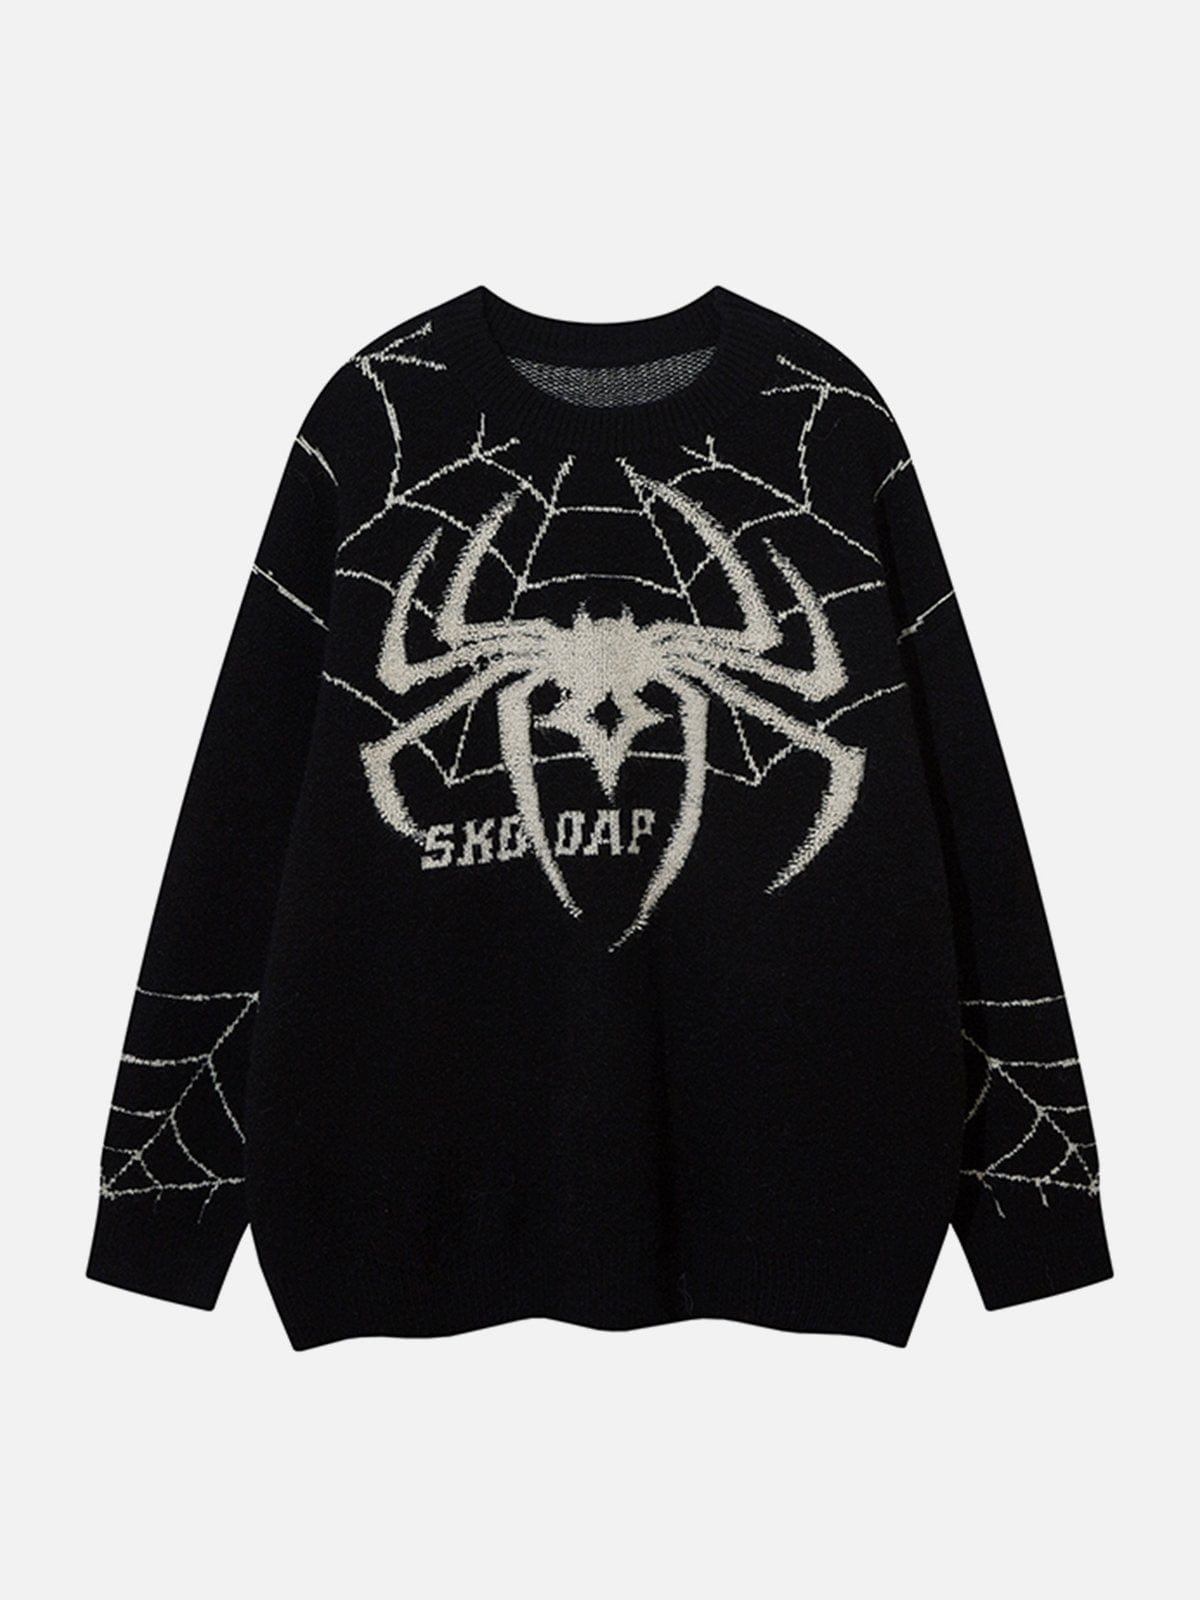 NEV Spider Web Jacquard Sweater